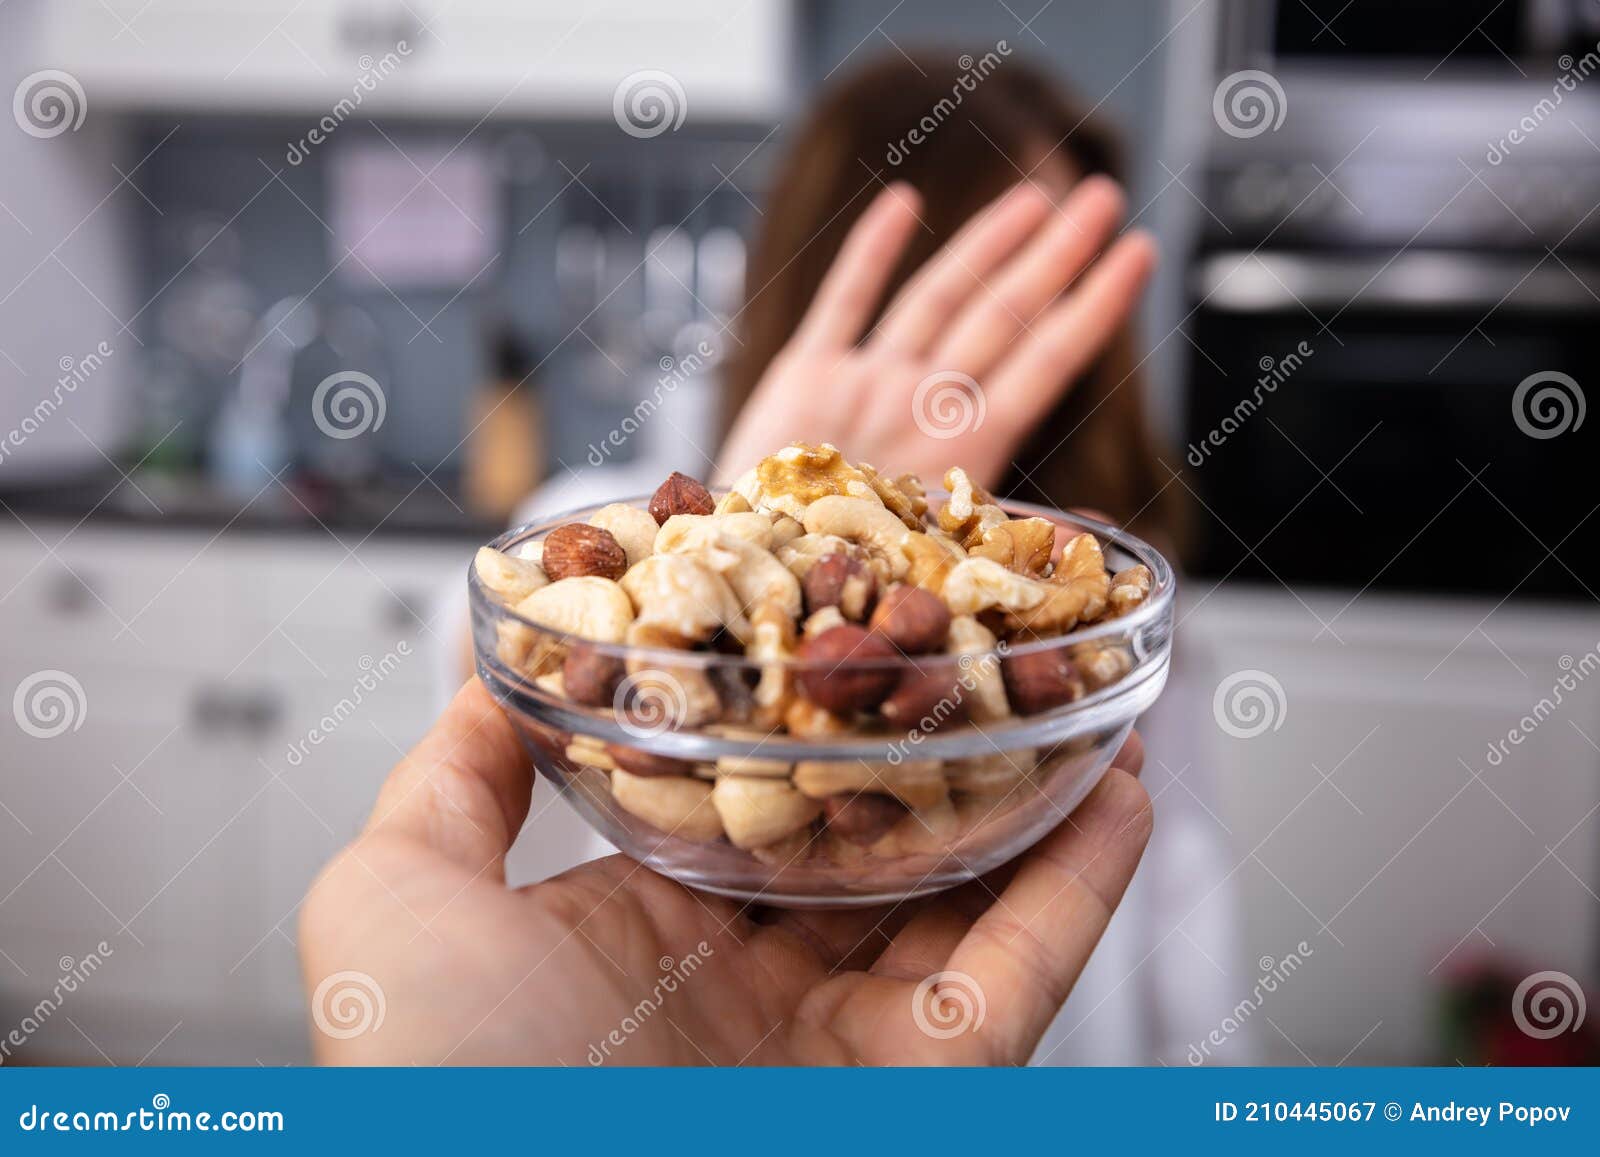 woman refusing bowl of nut food